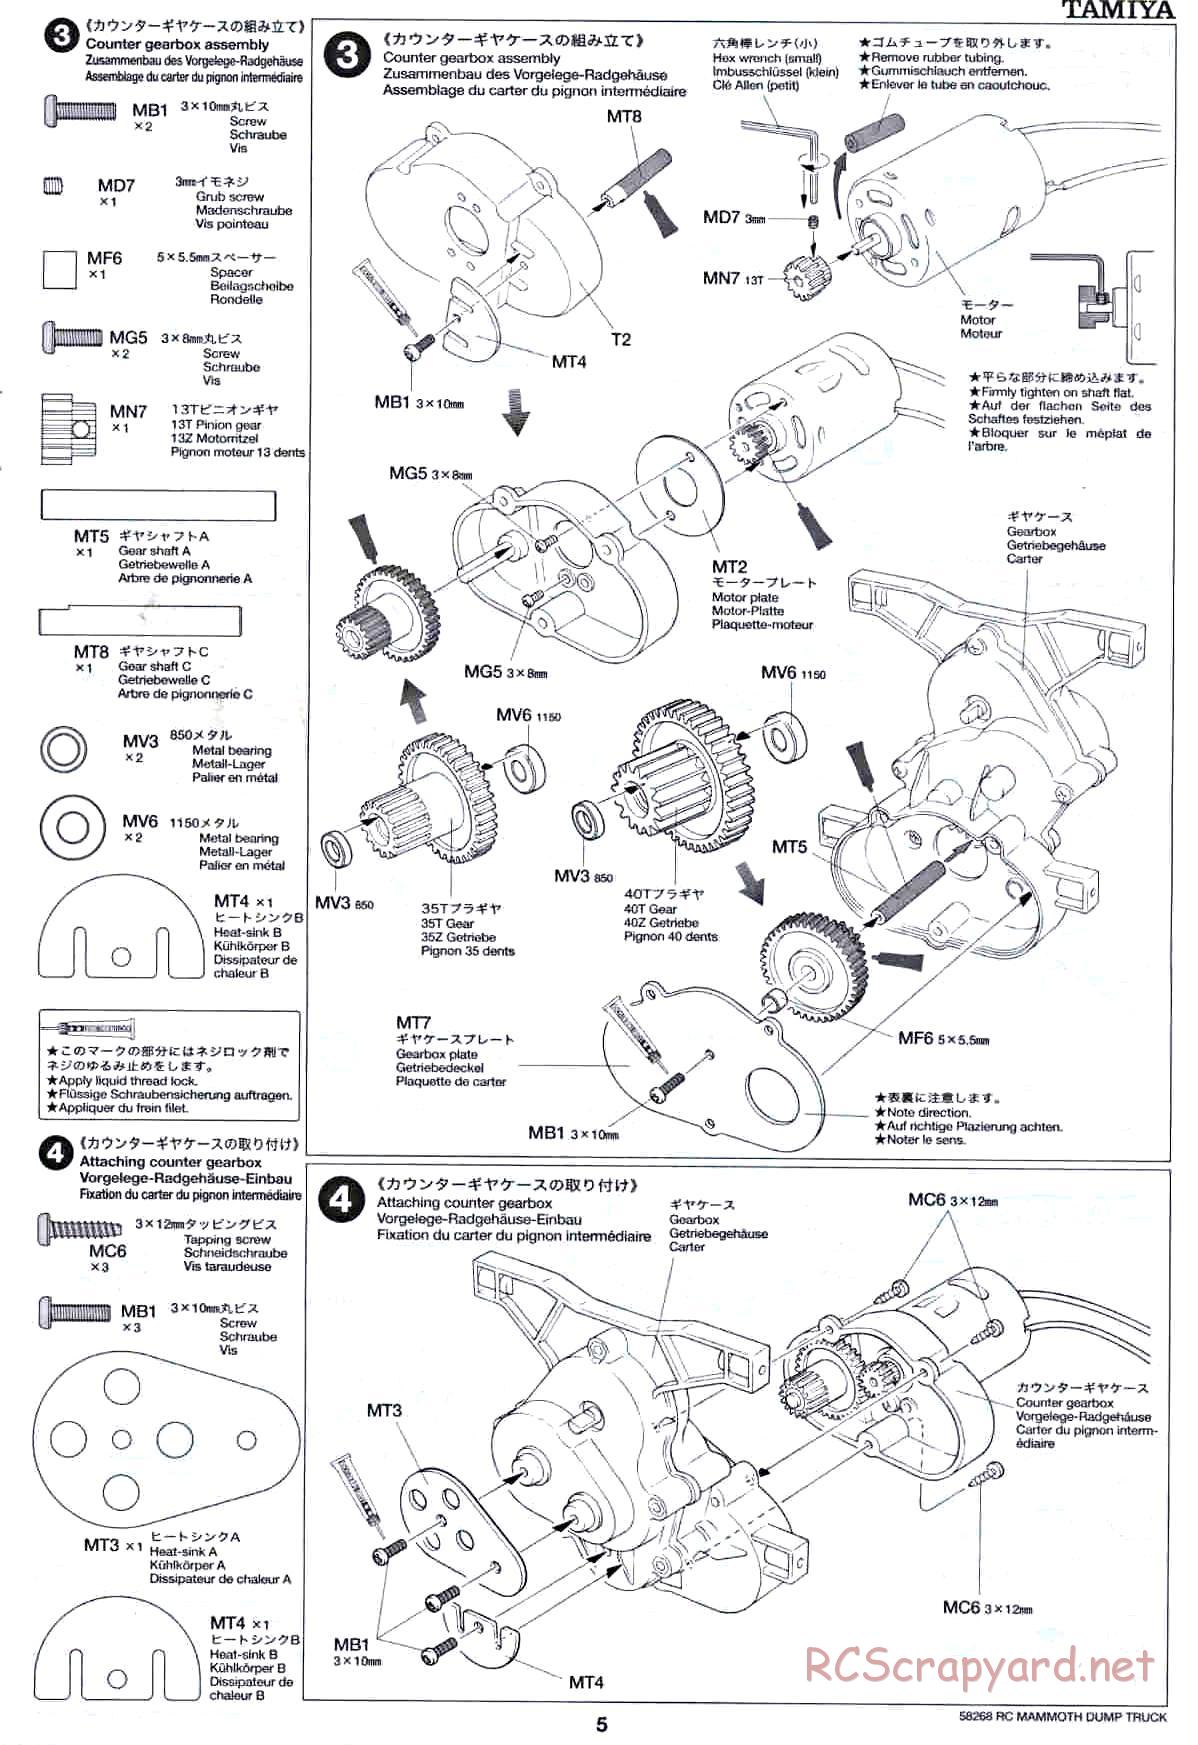 Tamiya - Mammoth Dump Truck Chassis - Manual - Page 5